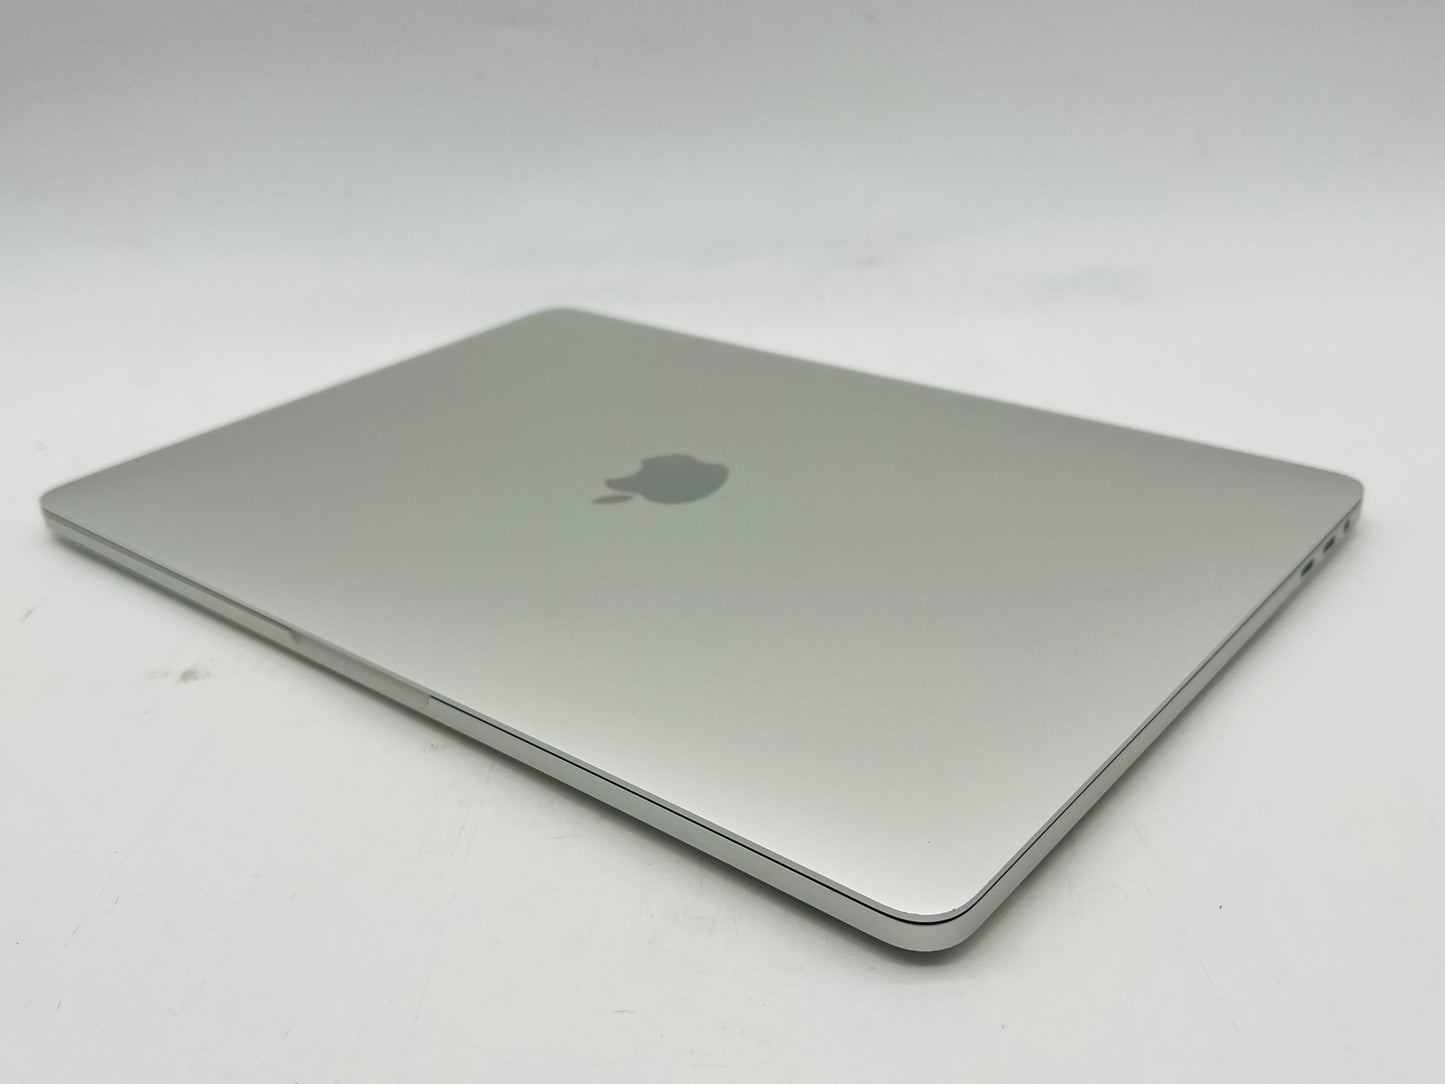 Apple 2019 MacBook Pro 13 in TB 2.4GHz i5 16GB RAM 512GB SSD IIPG655 - Excellent